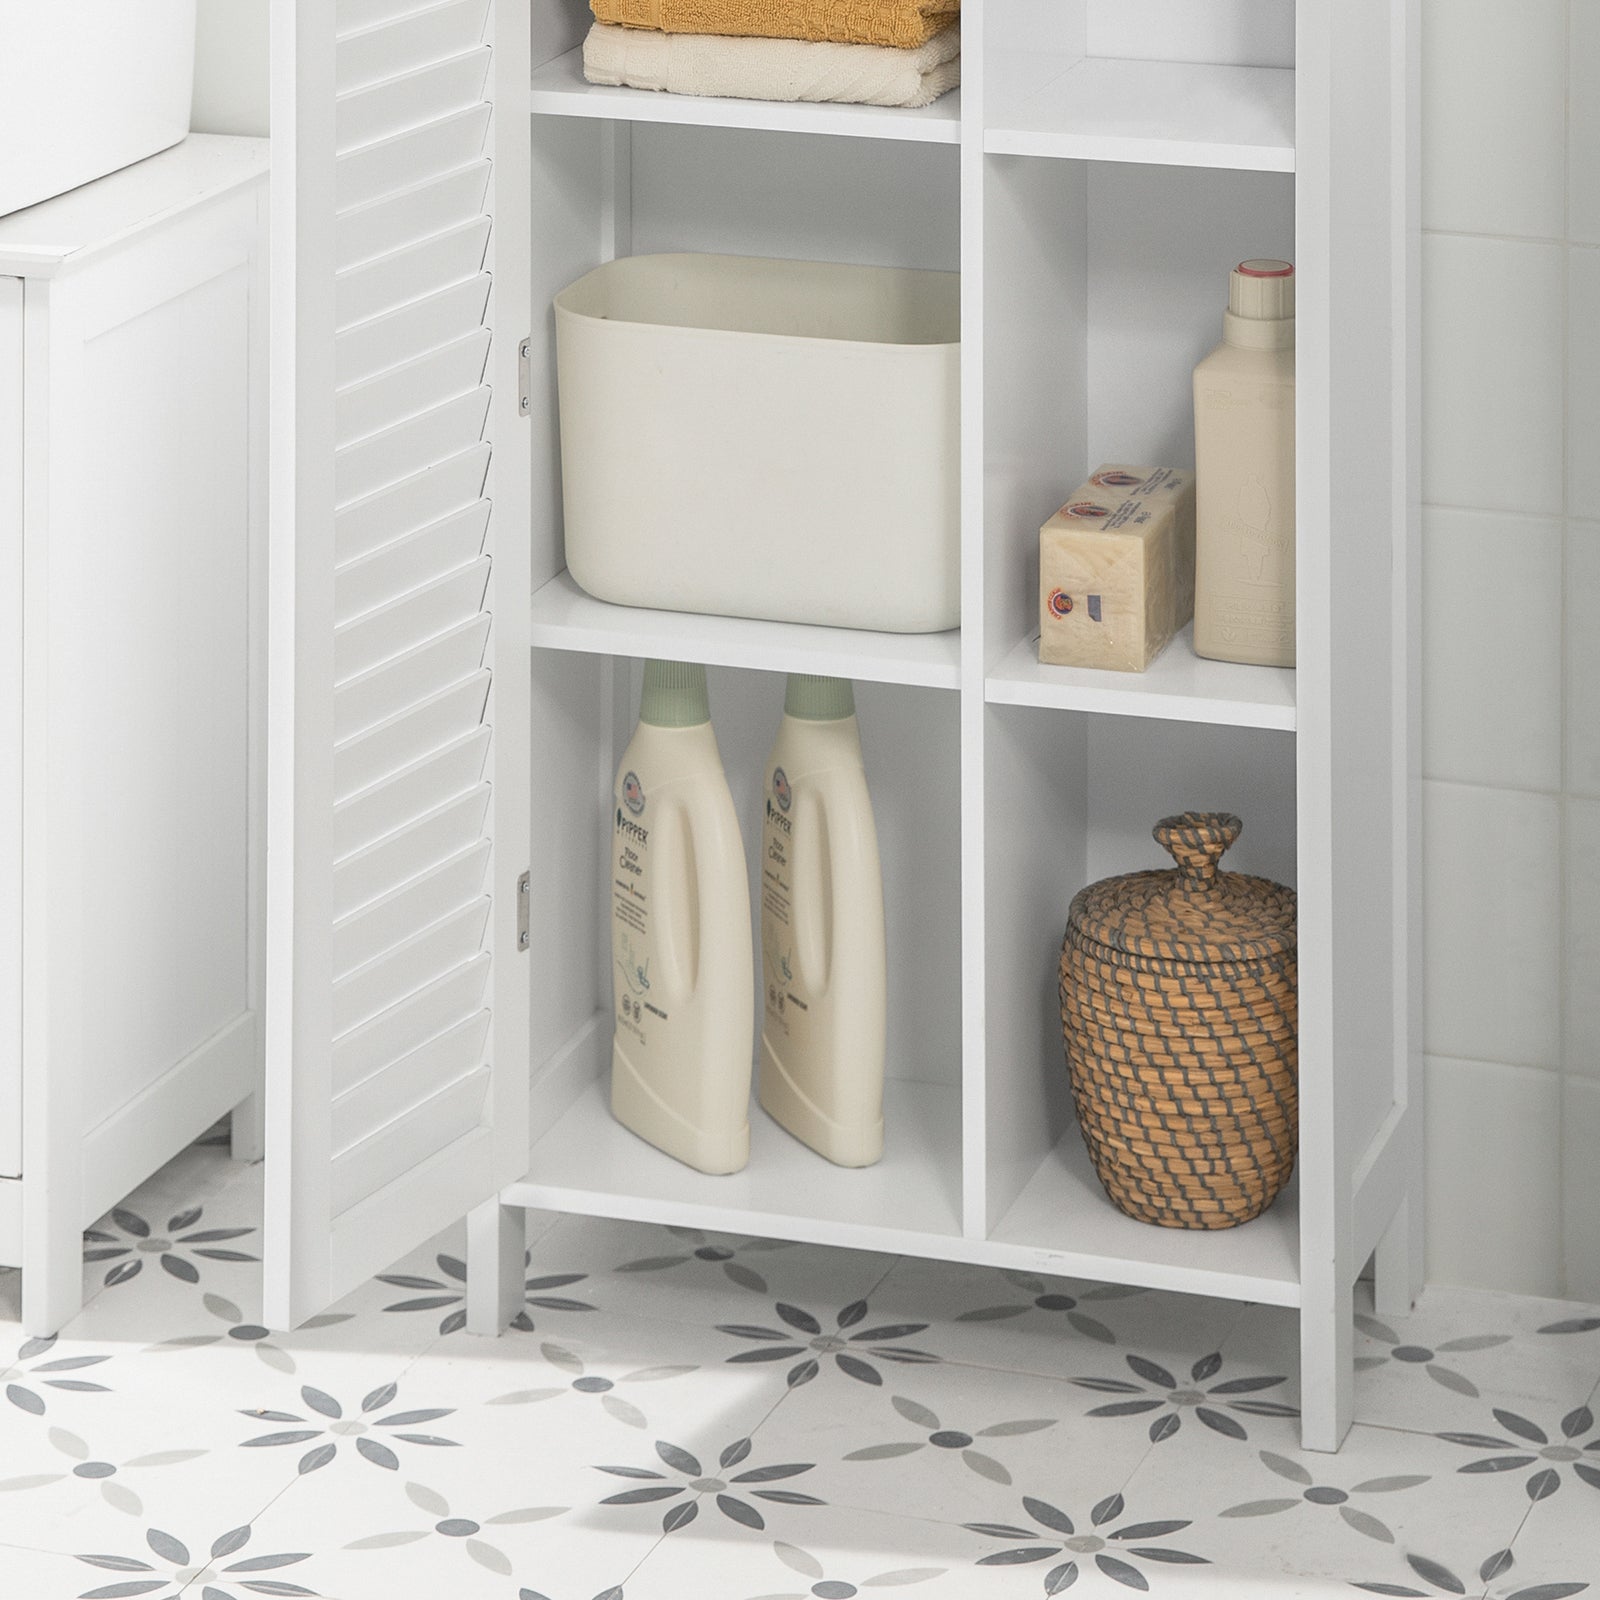 SoBuy BZR39-W Bathroom Storage Cabinet Cupboard with 3 Shelves and 1 Shutter Door